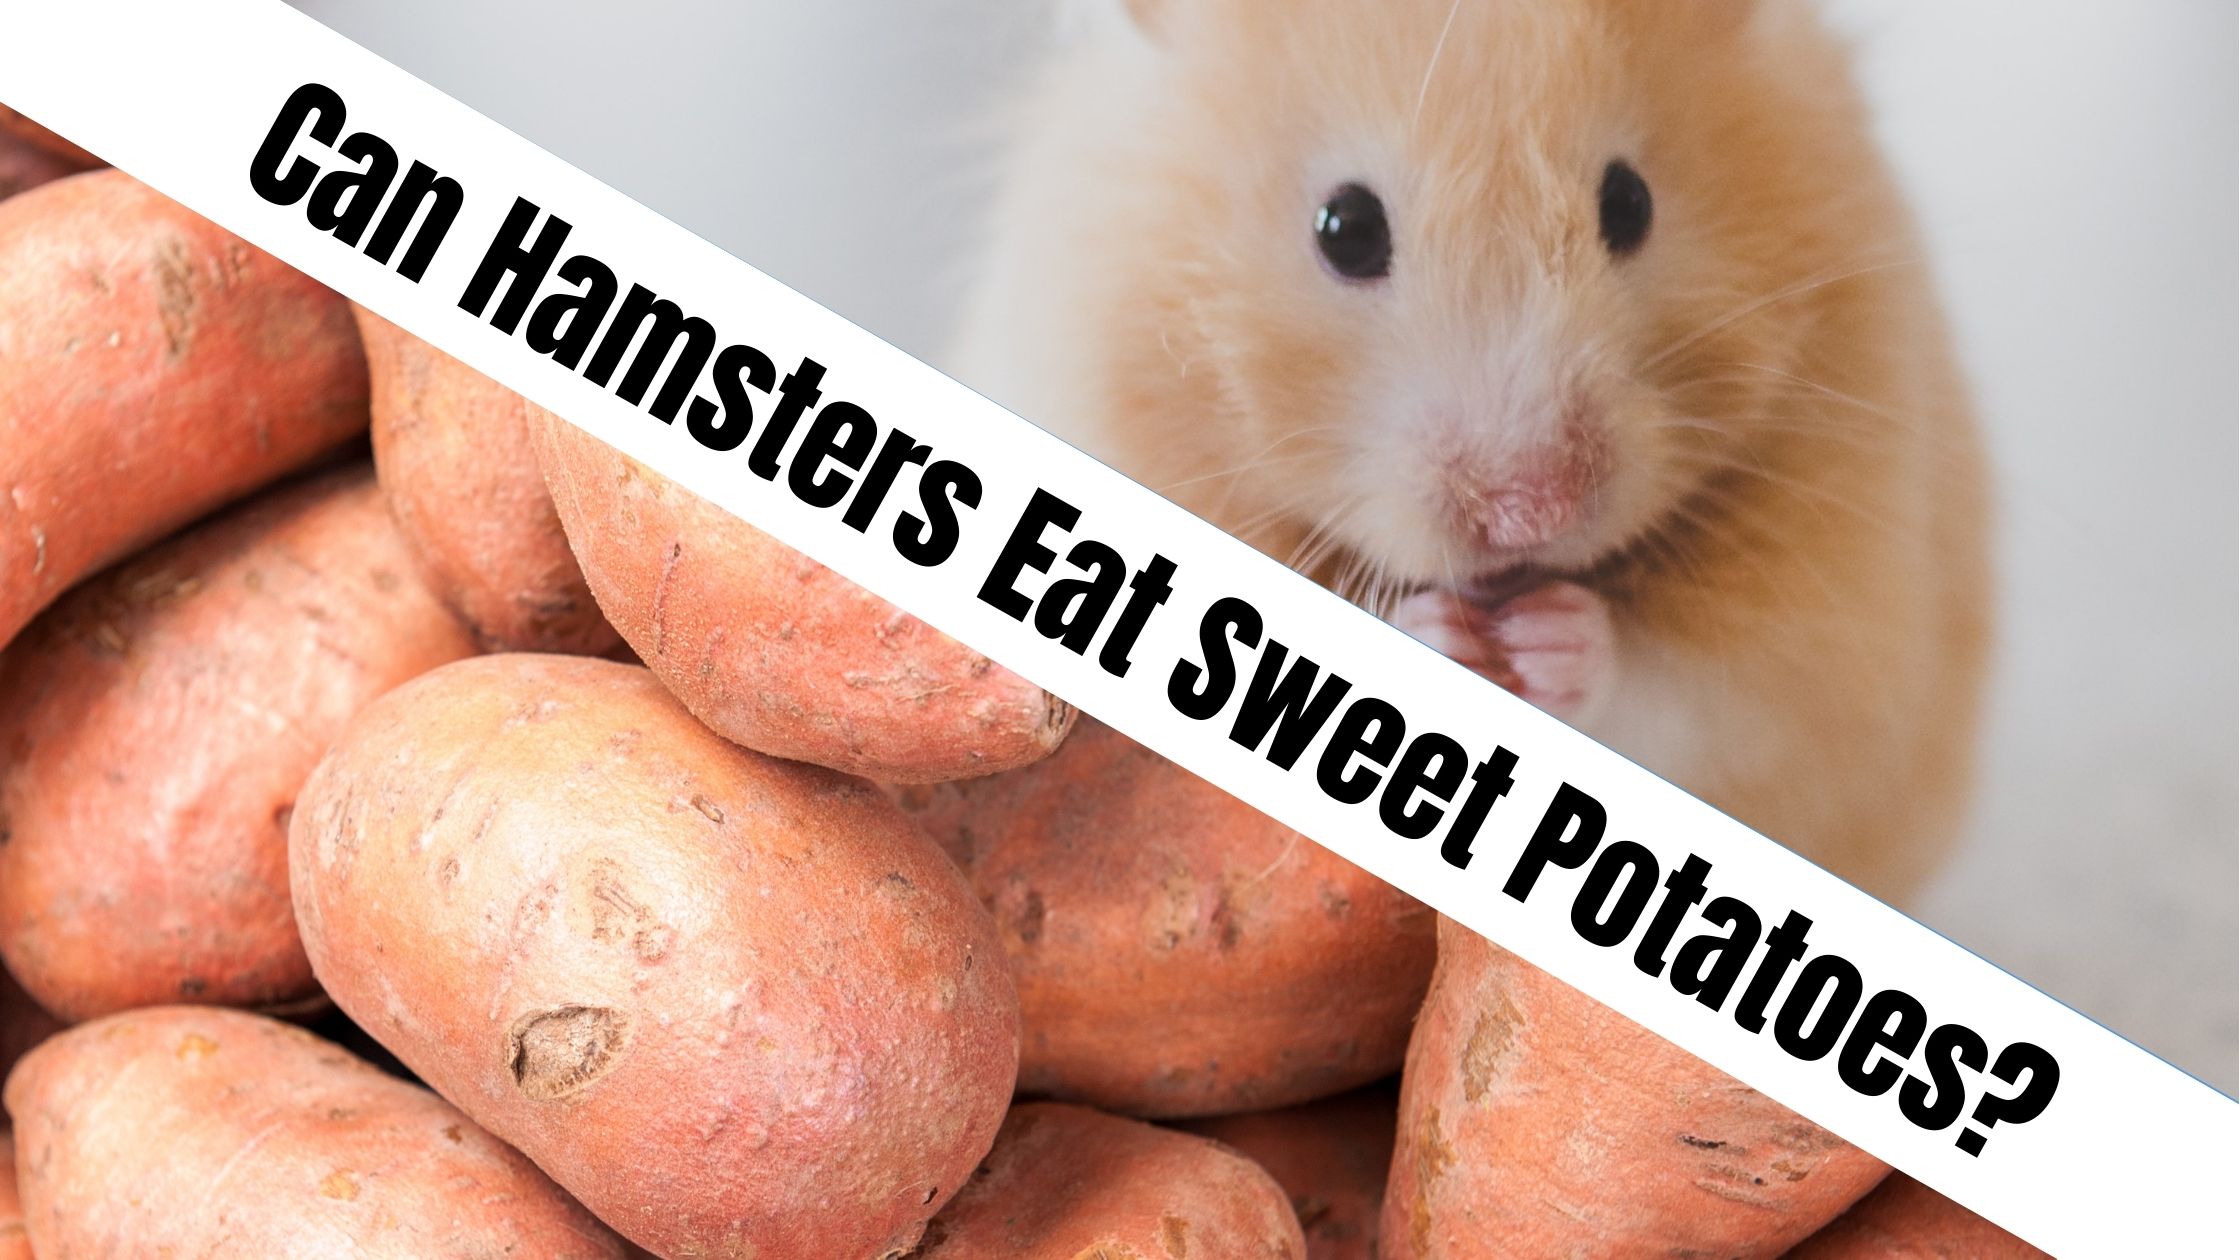 Can Hamsters Eat Sweet Potatoes?